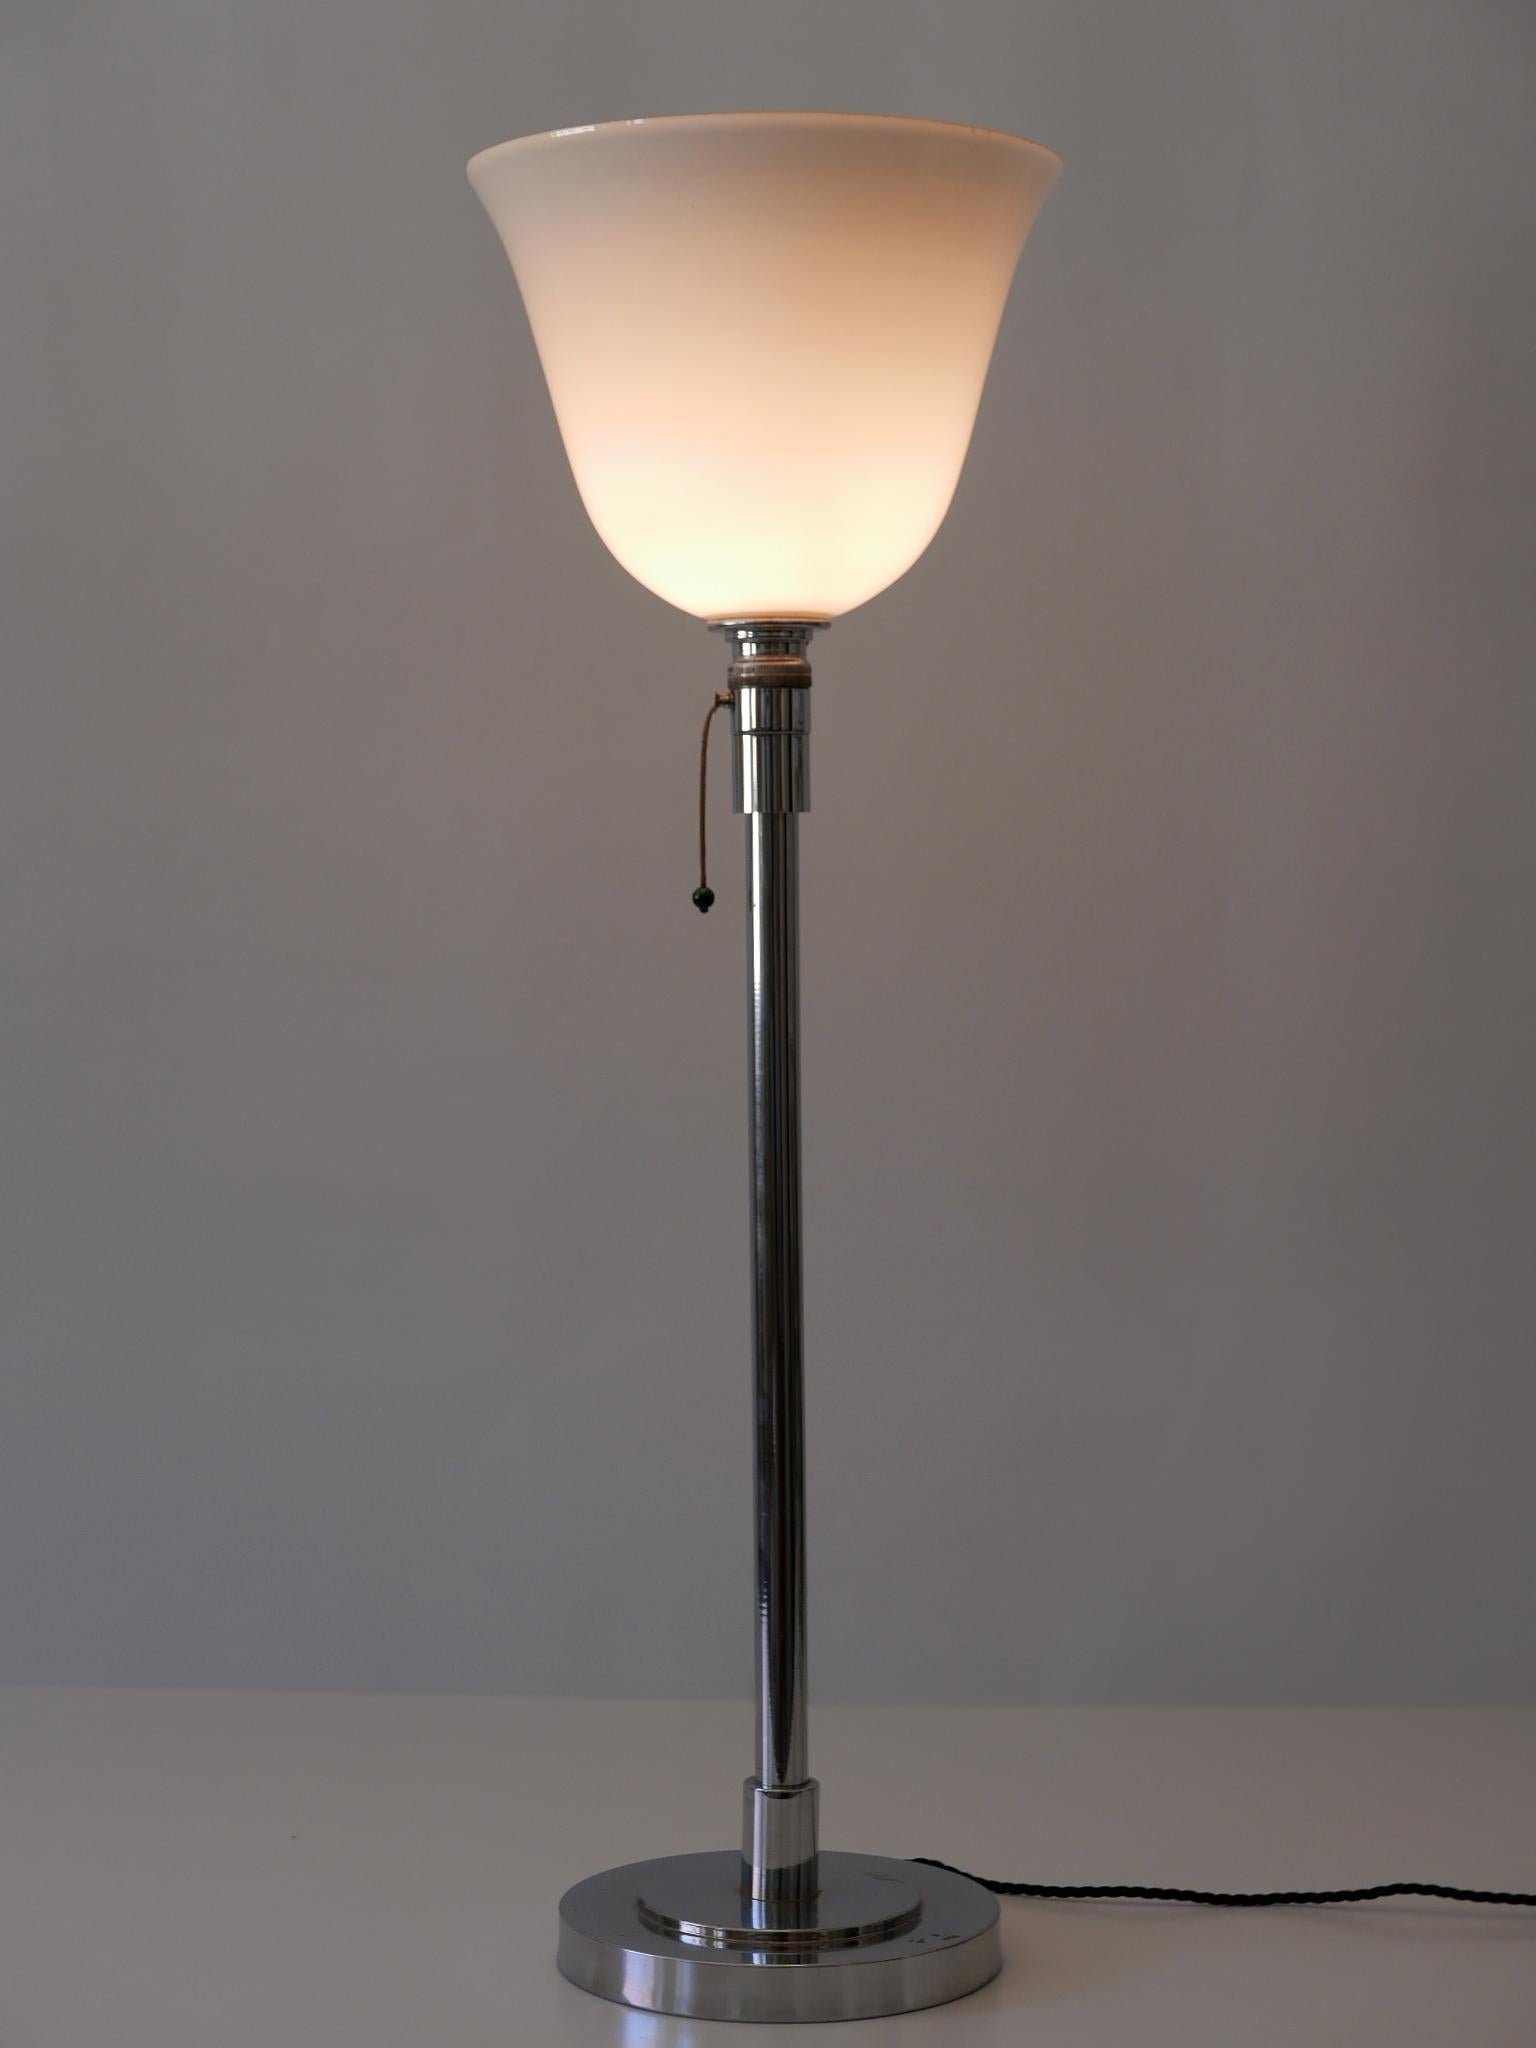 Elegant Art Deco Bauhaus Table Lamp or Floor Light by Mazda Paris, France, 1930s In Good Condition For Sale In Munich, DE